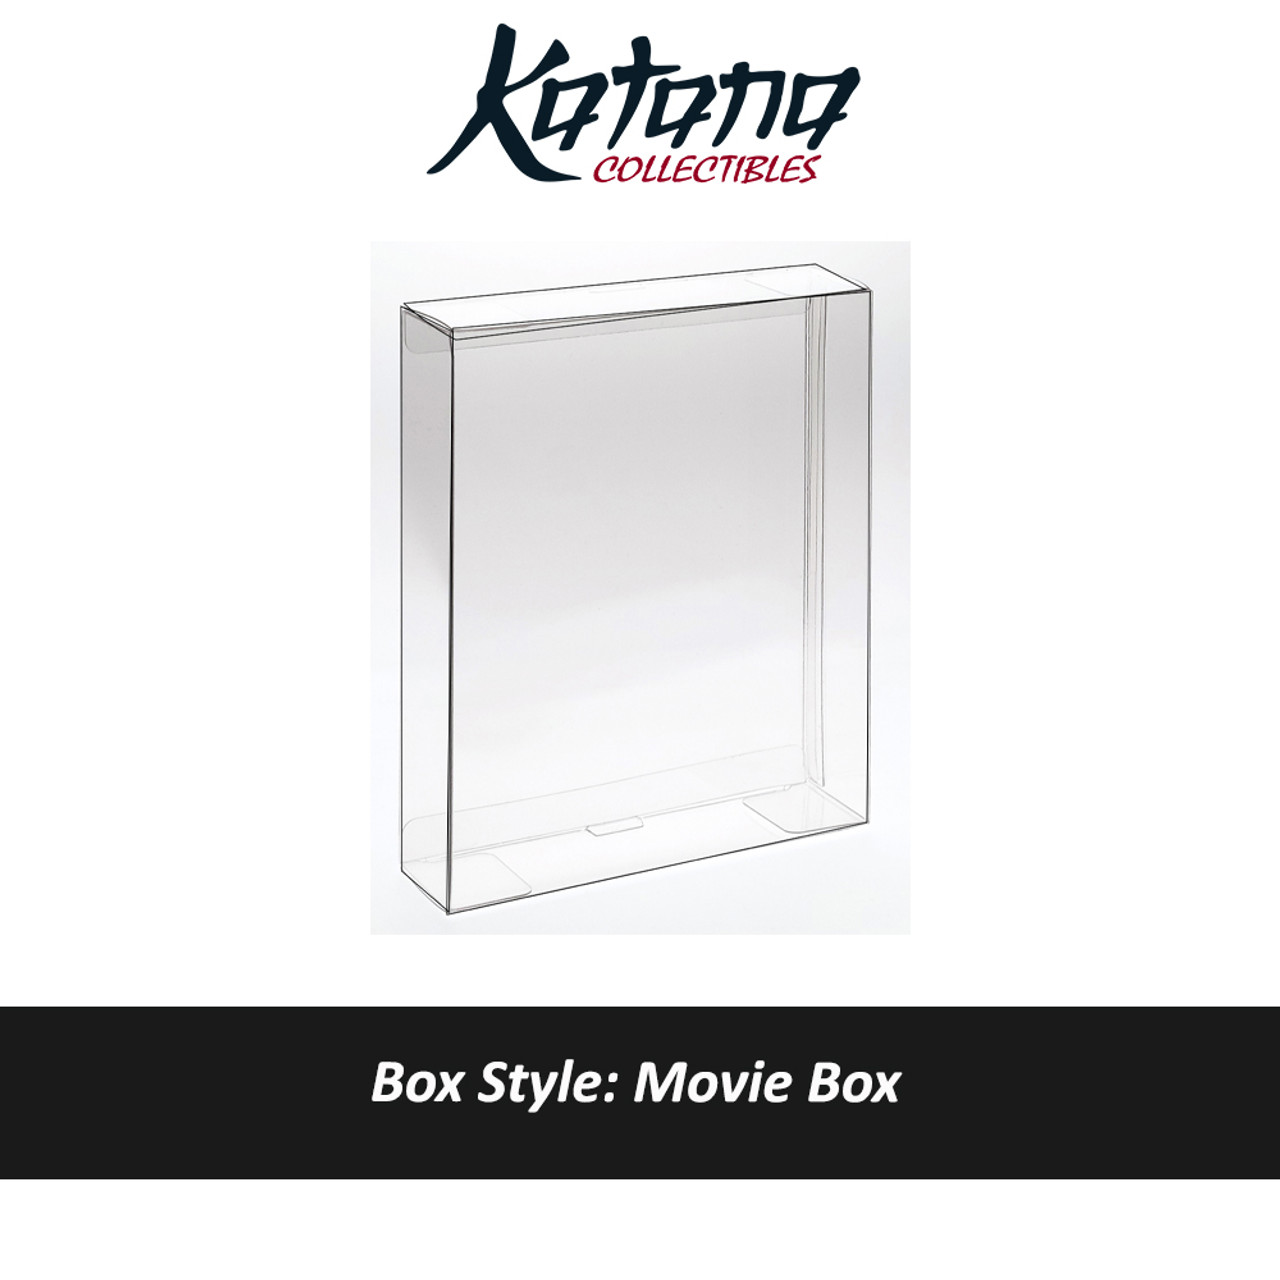 Katana Collectibles Protector For Heat Blu-Ray box set